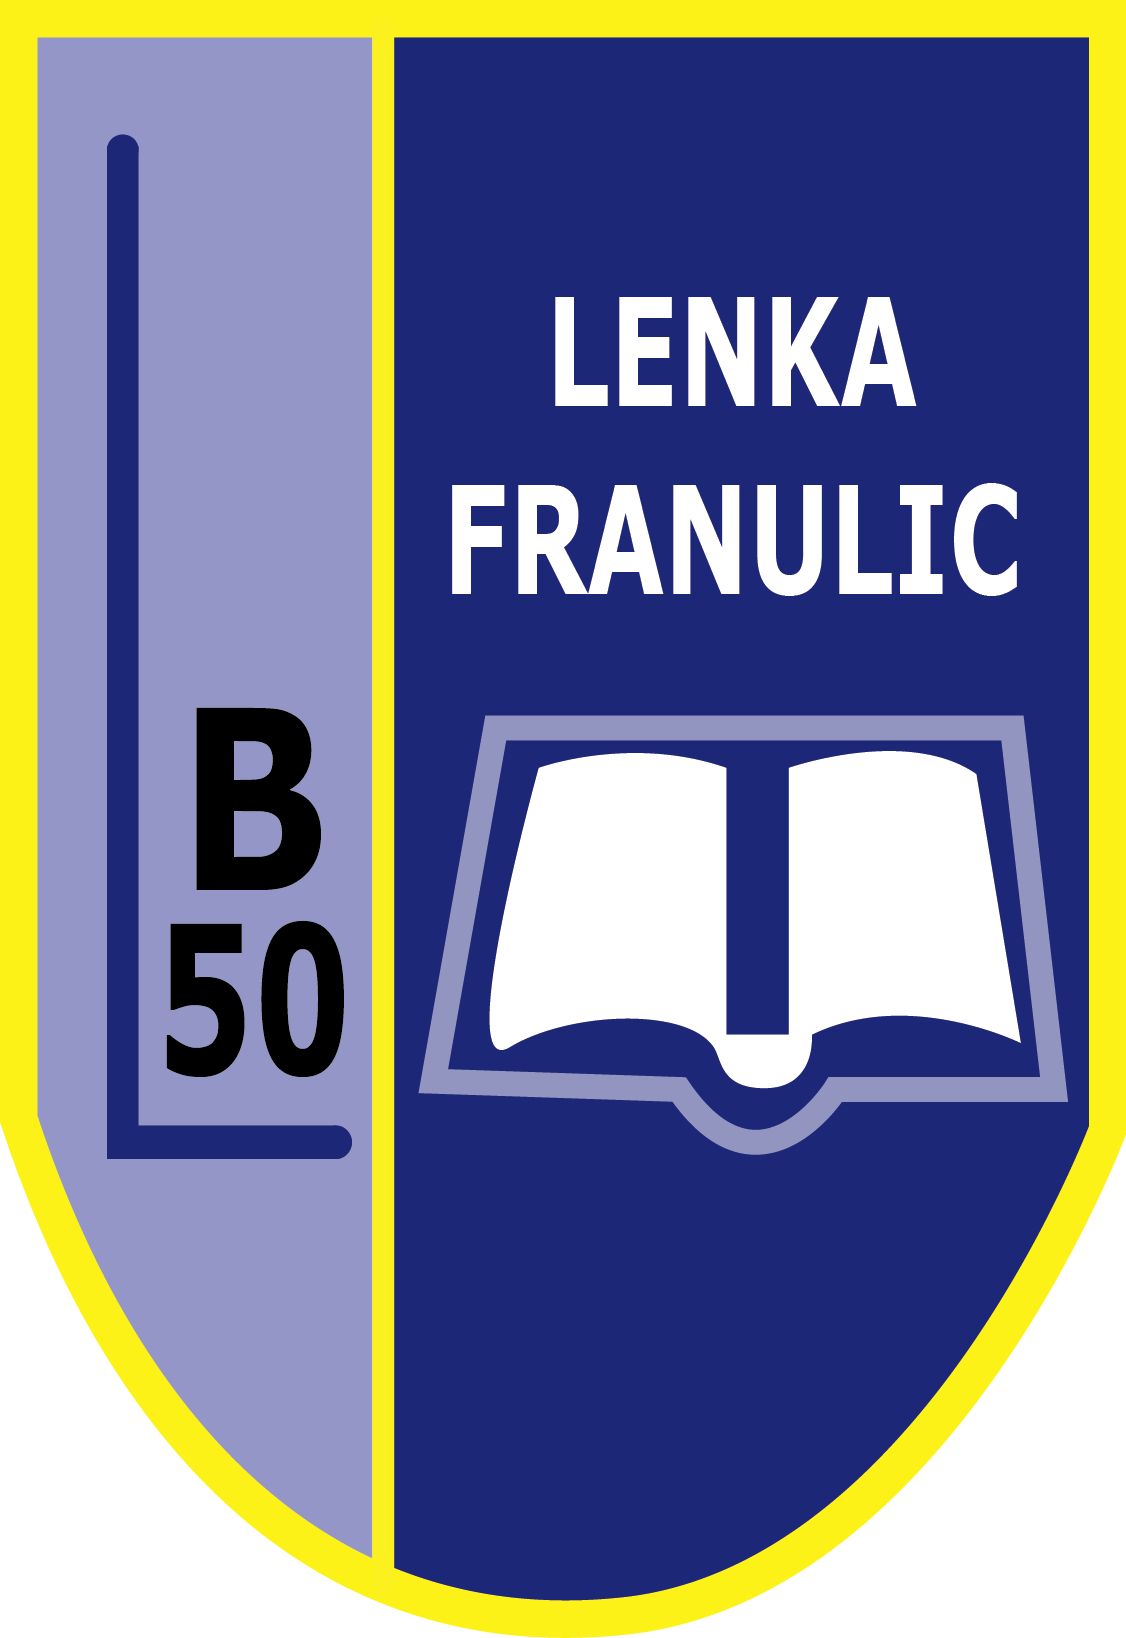 Colegio lenka franulic Logotipo